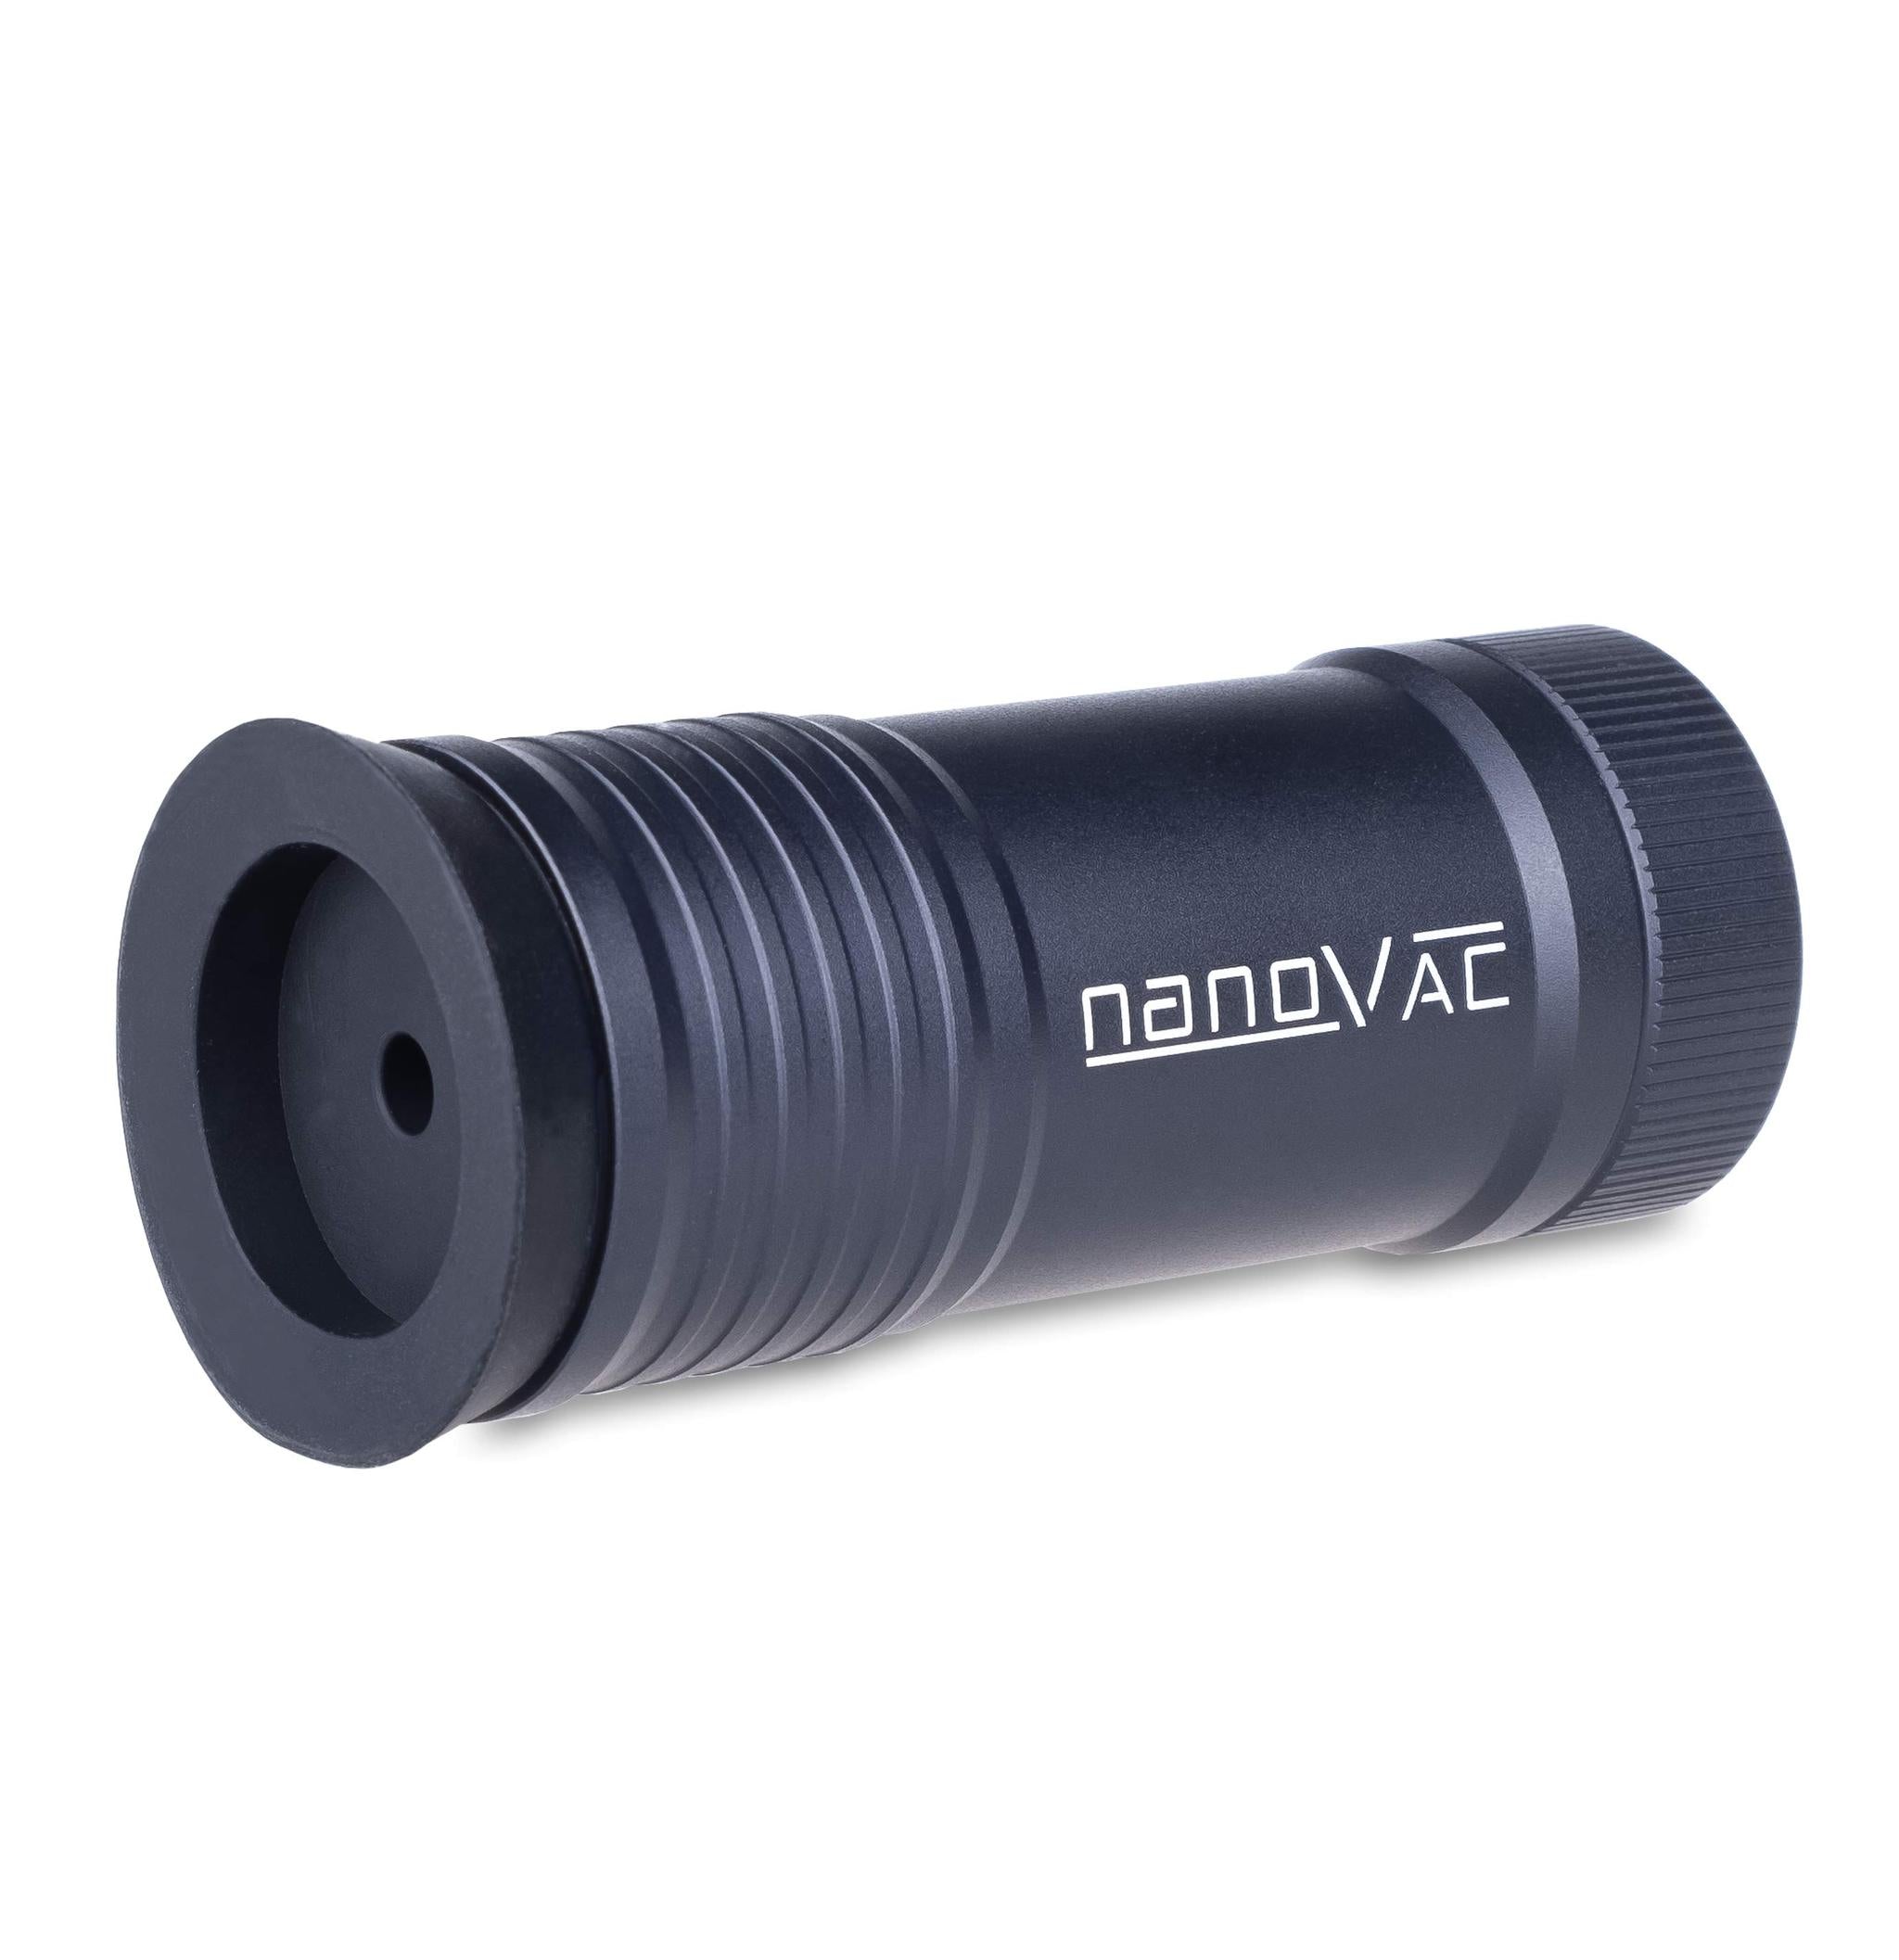 NanoVac Vaccum Pump for airlock filament vacuum sealing system